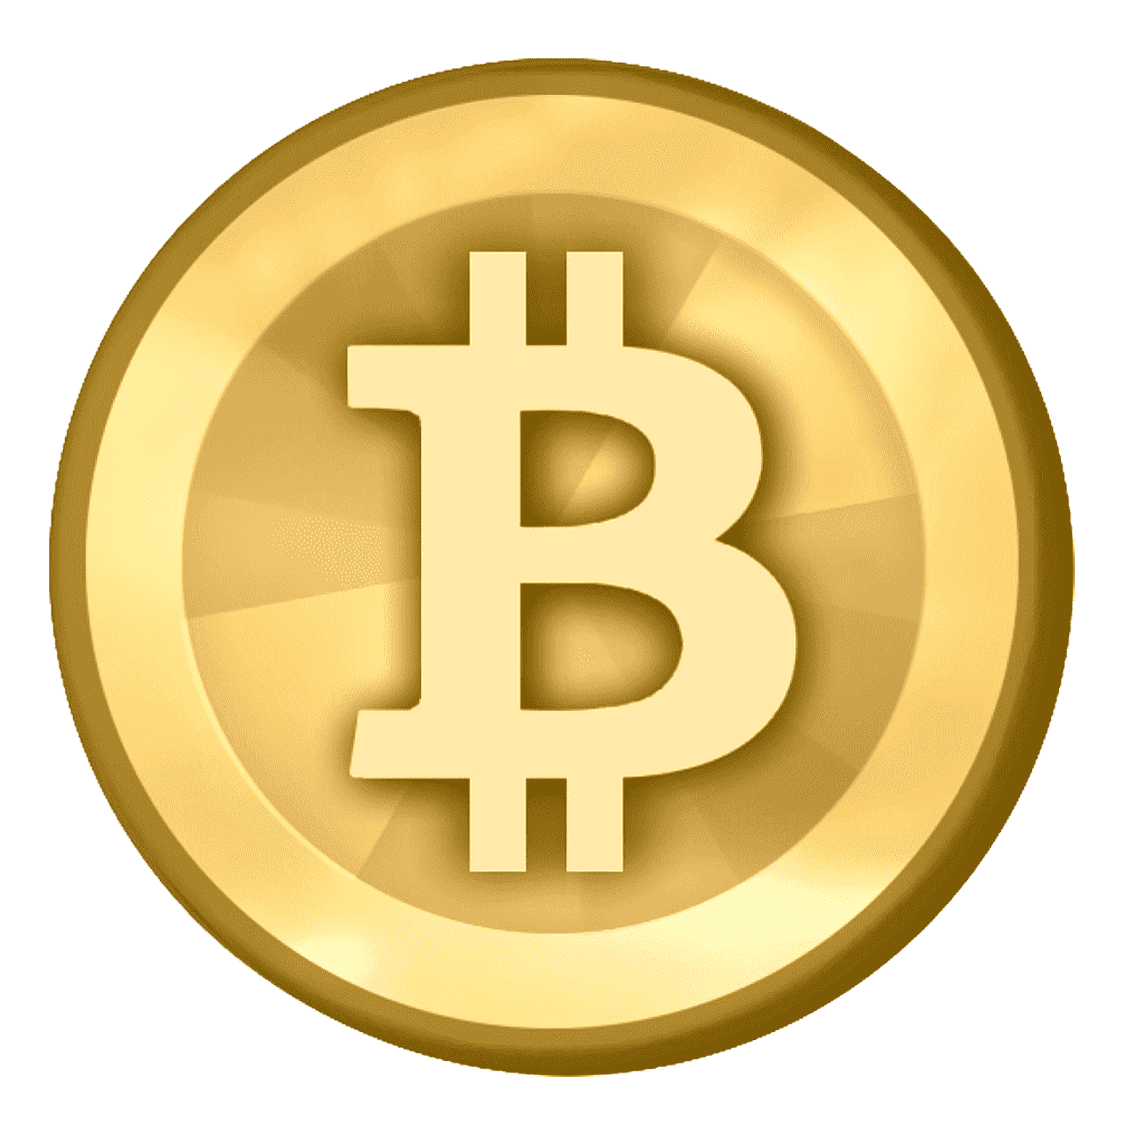 Updated bitcoin logo 2010